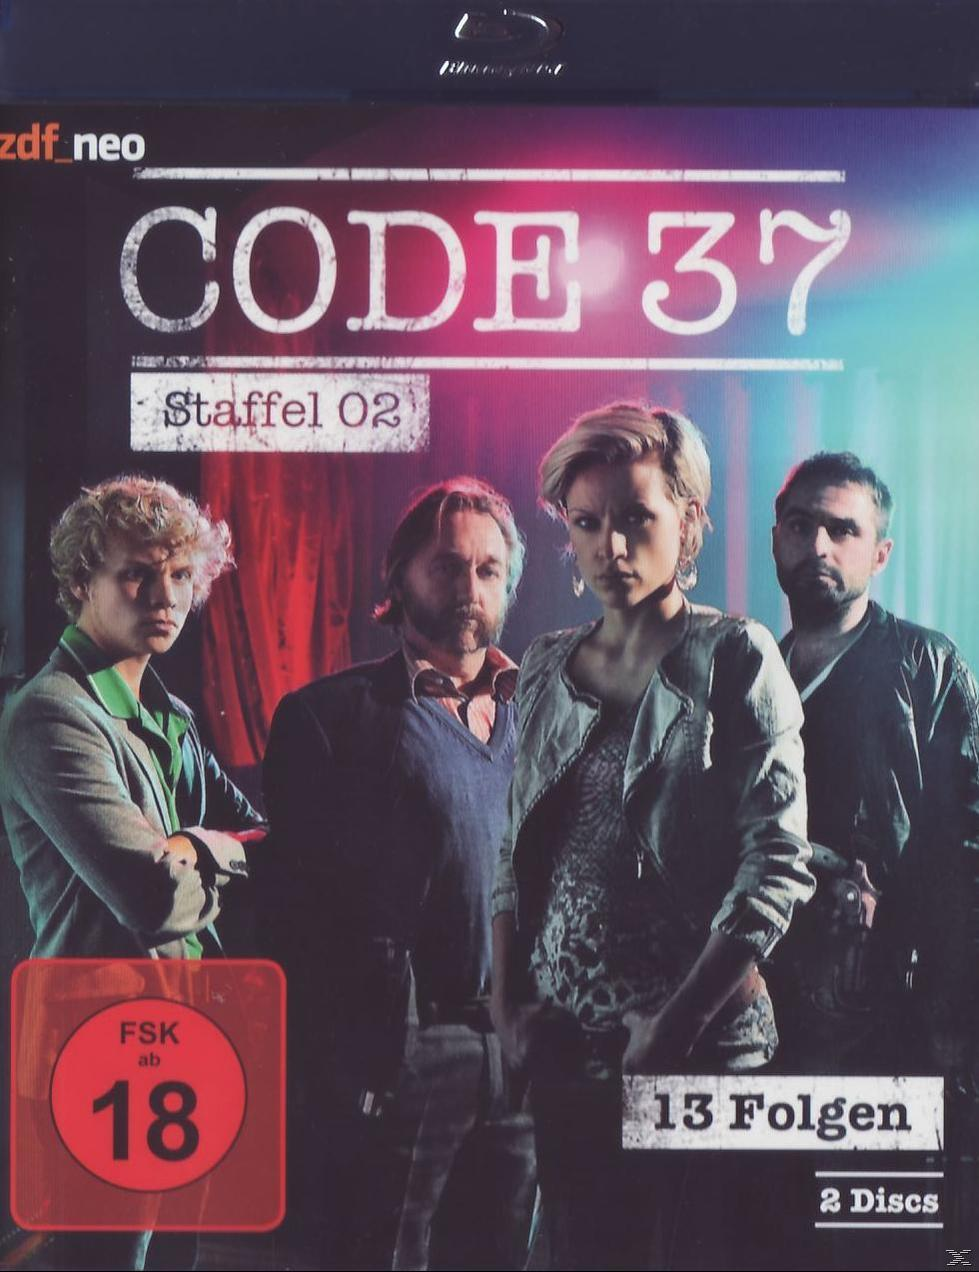 Code 37 Blu-ray - Staffel 2